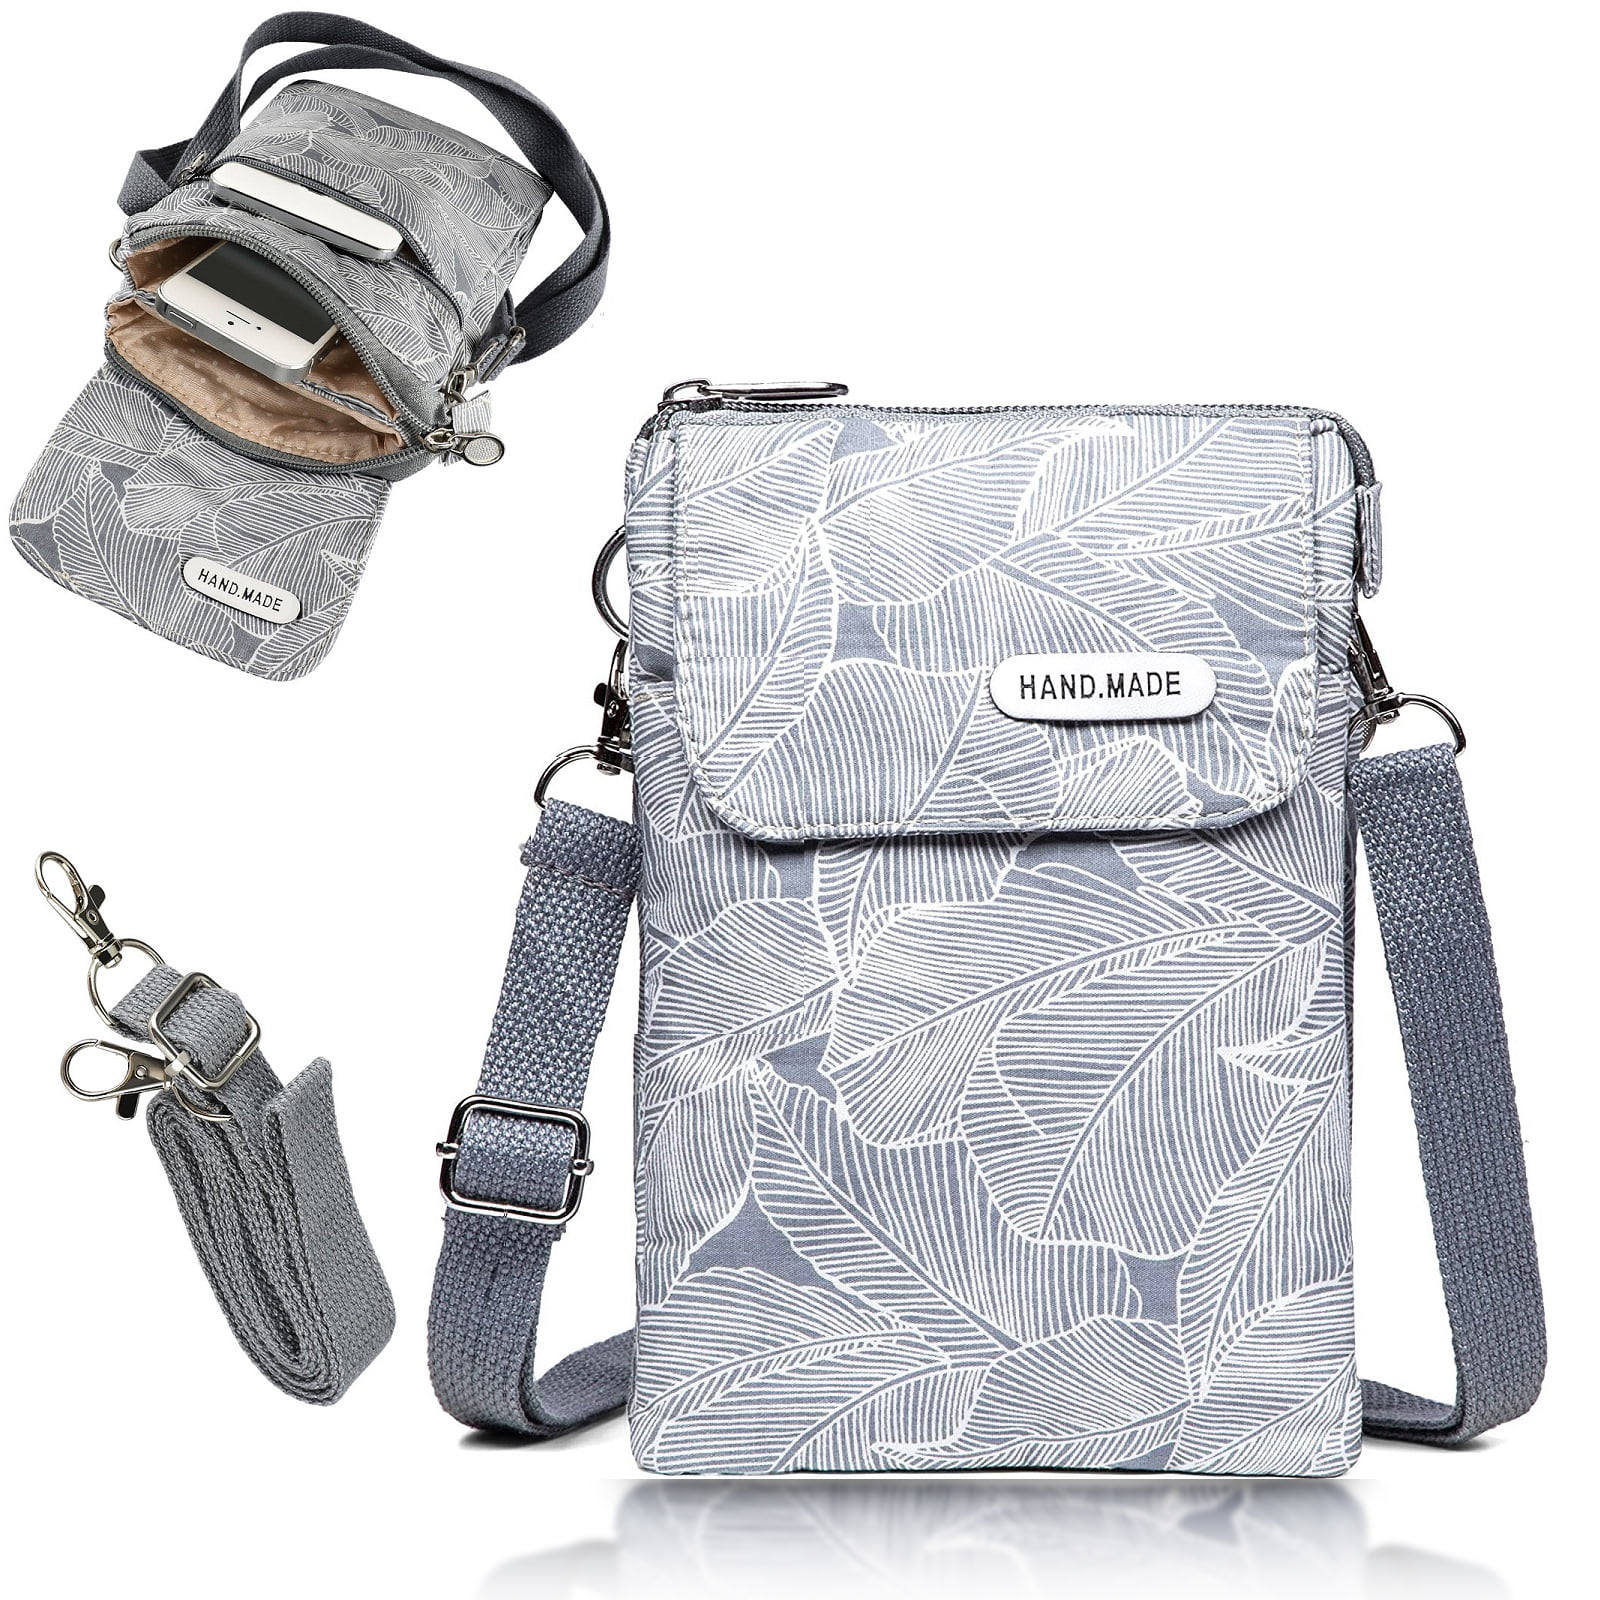 Fashion Zipper Circle Purse Clutch Mobile Phone Technology Intelligent Round Shoulder Cross-body Bag Tote Handbag Canvas Messenger Purse Wallet 